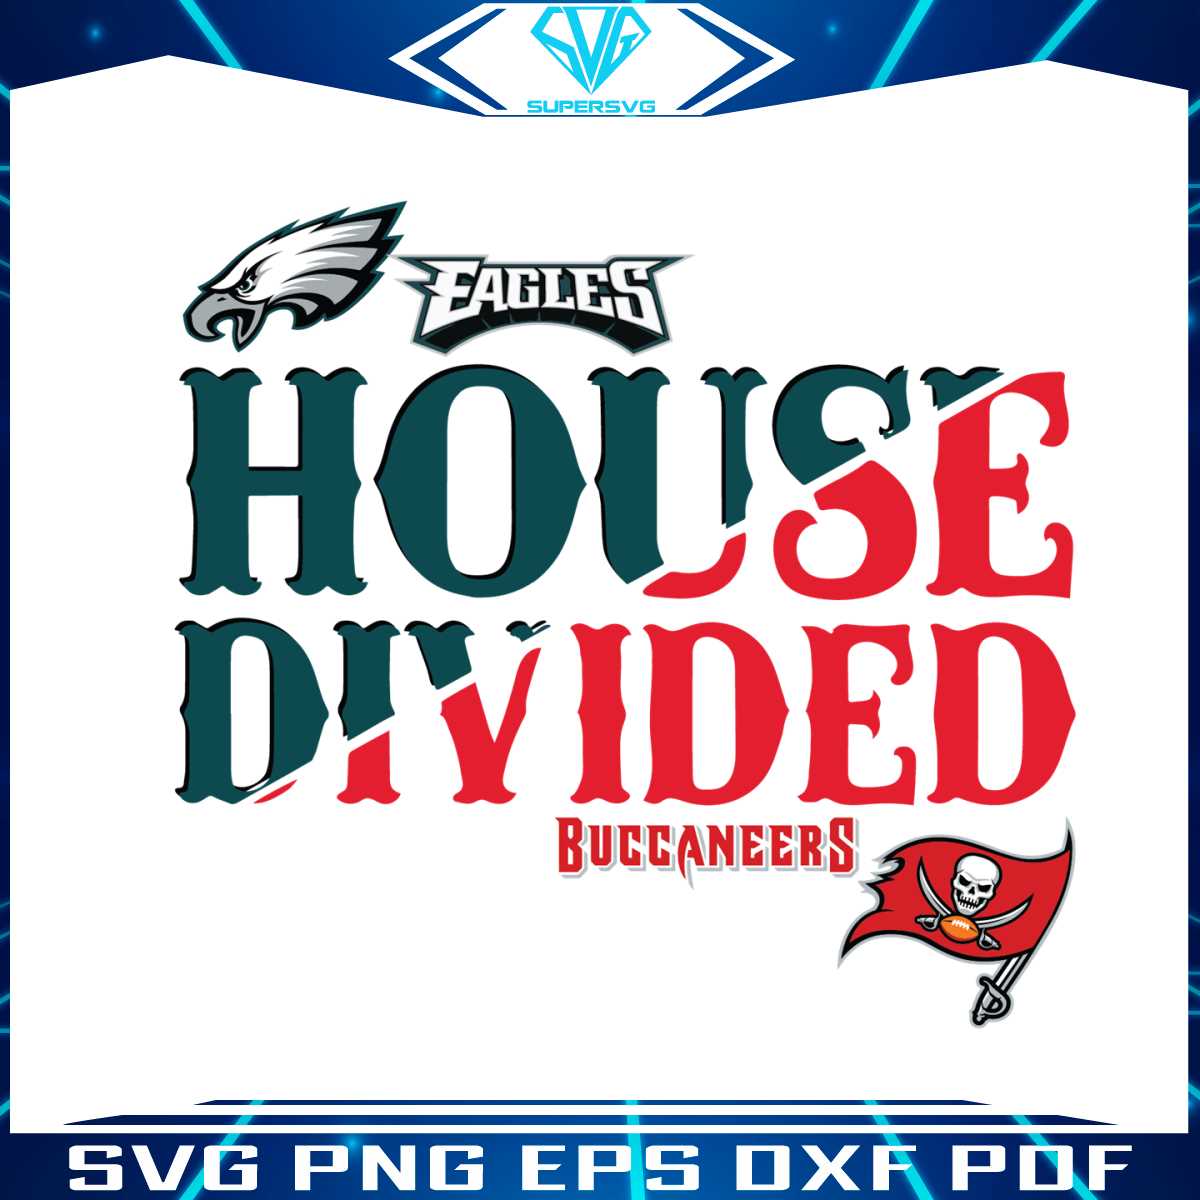 house-divided-philadelphia-eagles-vs-buccaneers-svg